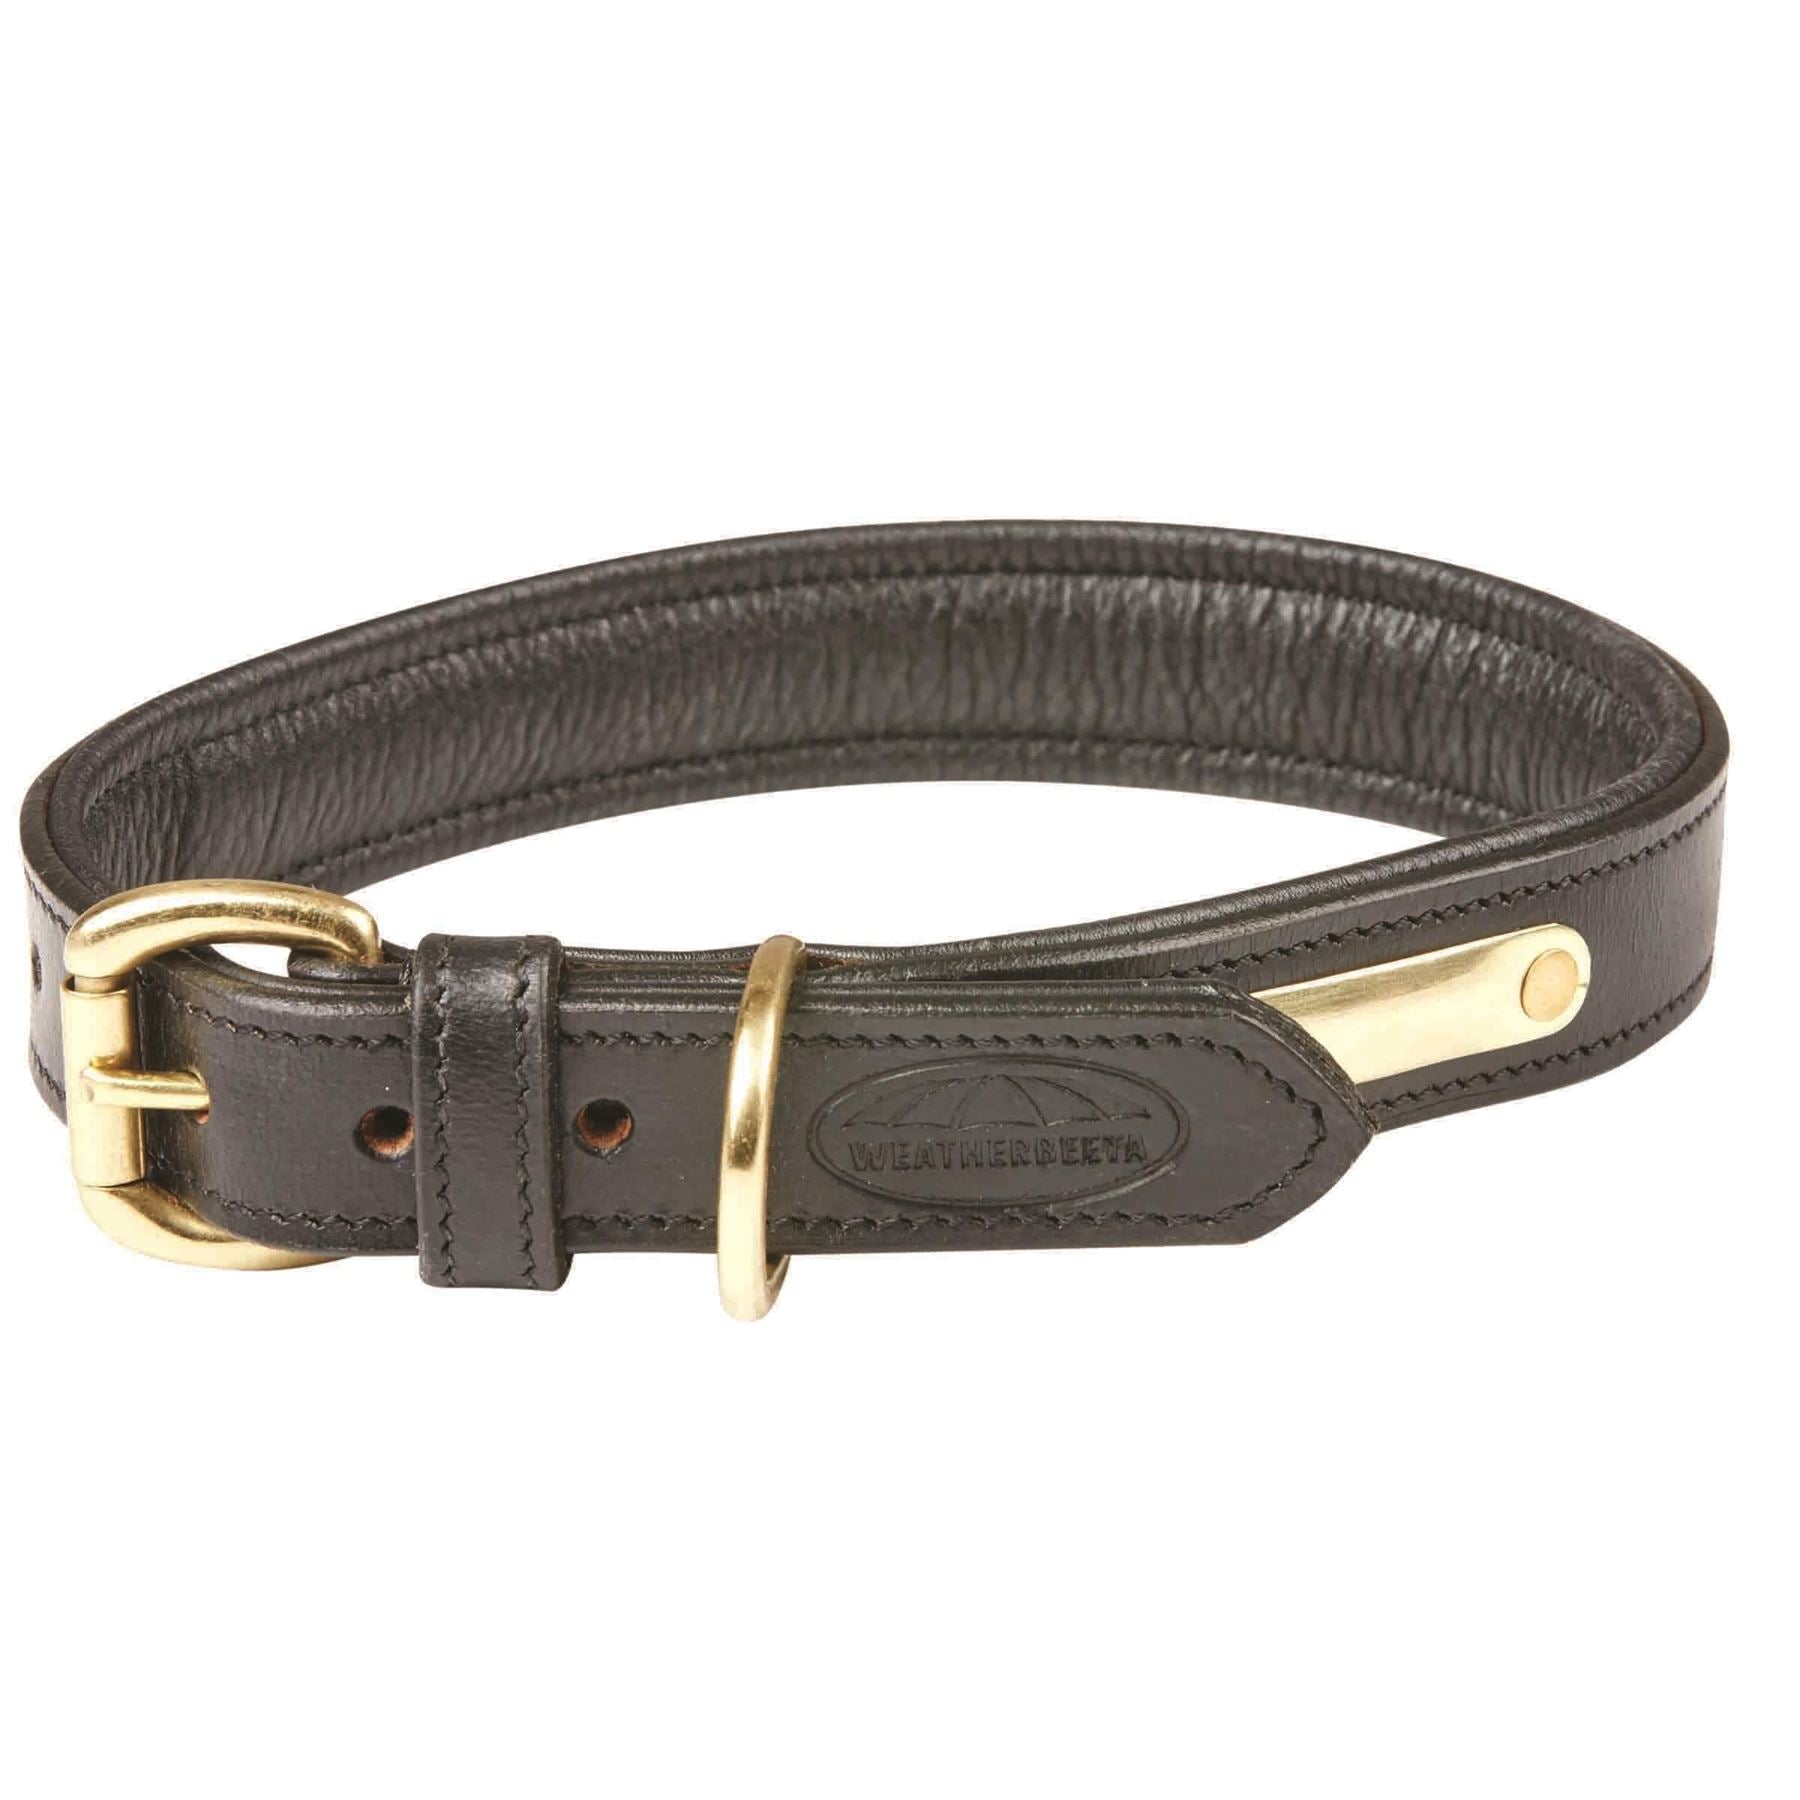 Weatherbeeta Padded Leather Dog Collar - Just Horse Riders